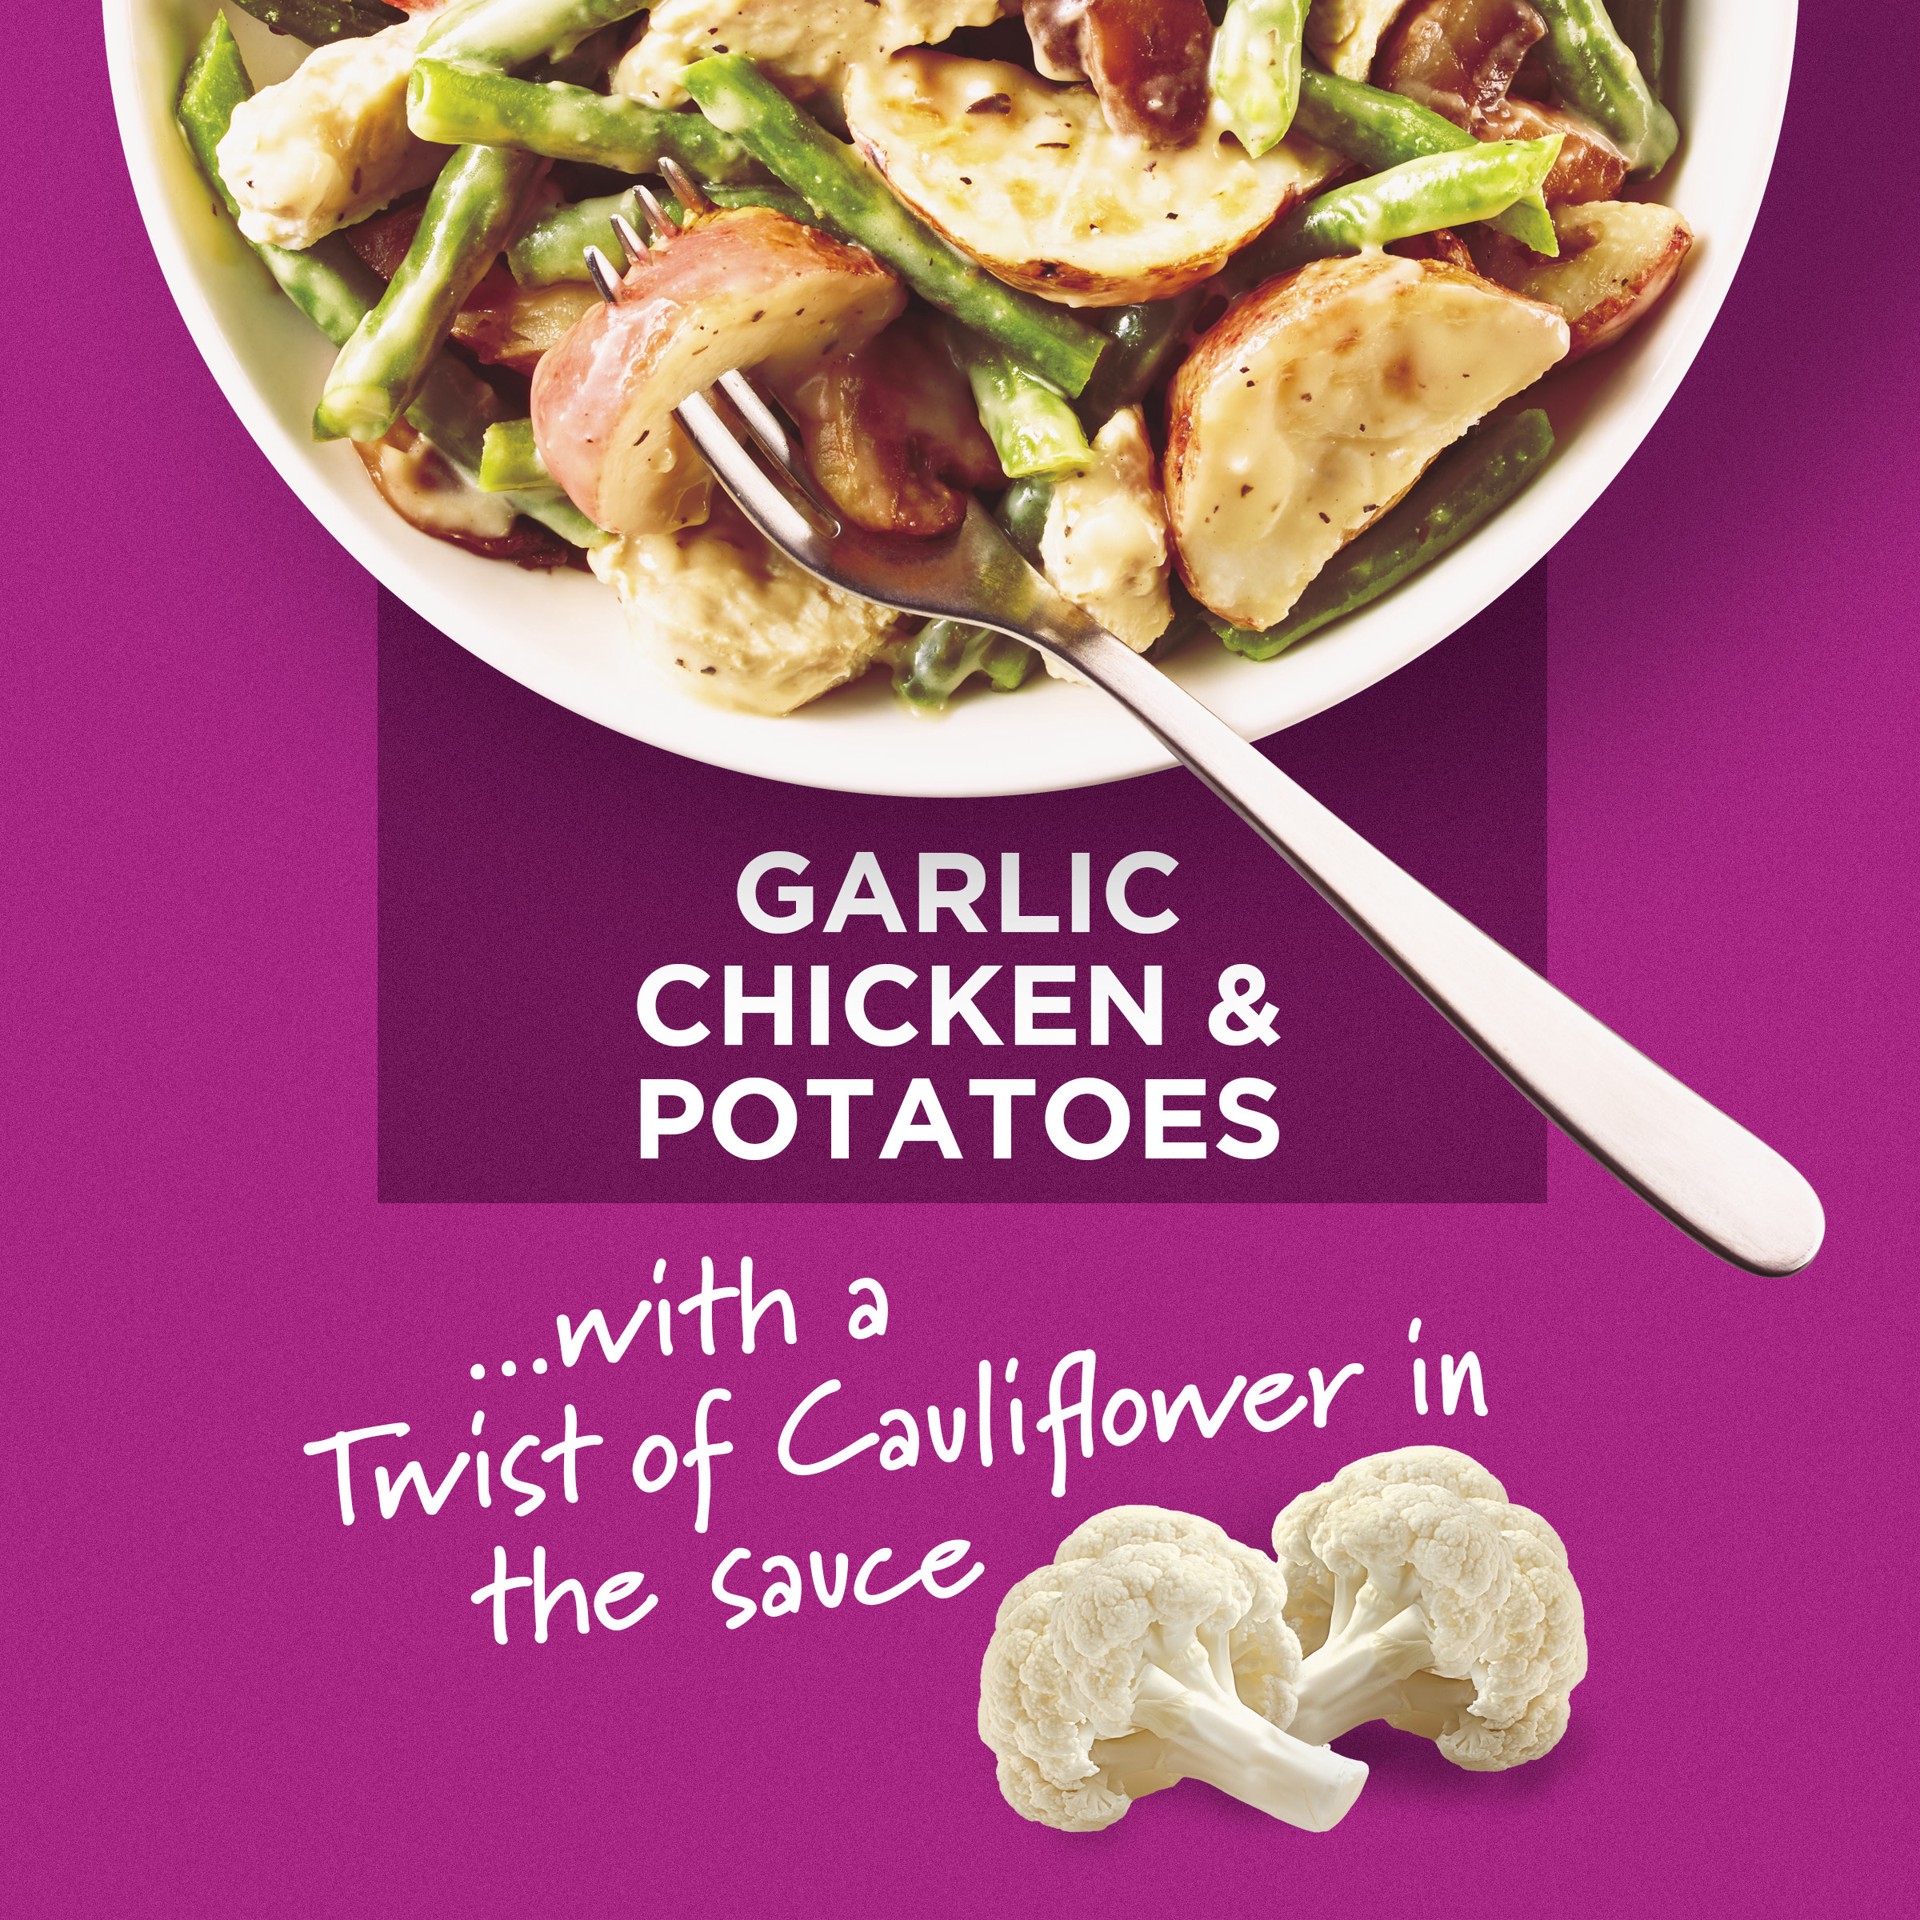 slide 7 of 7, O, That's Good! Garlic Chicken & Potatoes with Cauliflower in the Sauce Frozen Skillet, 21 oz Bag, 21 oz